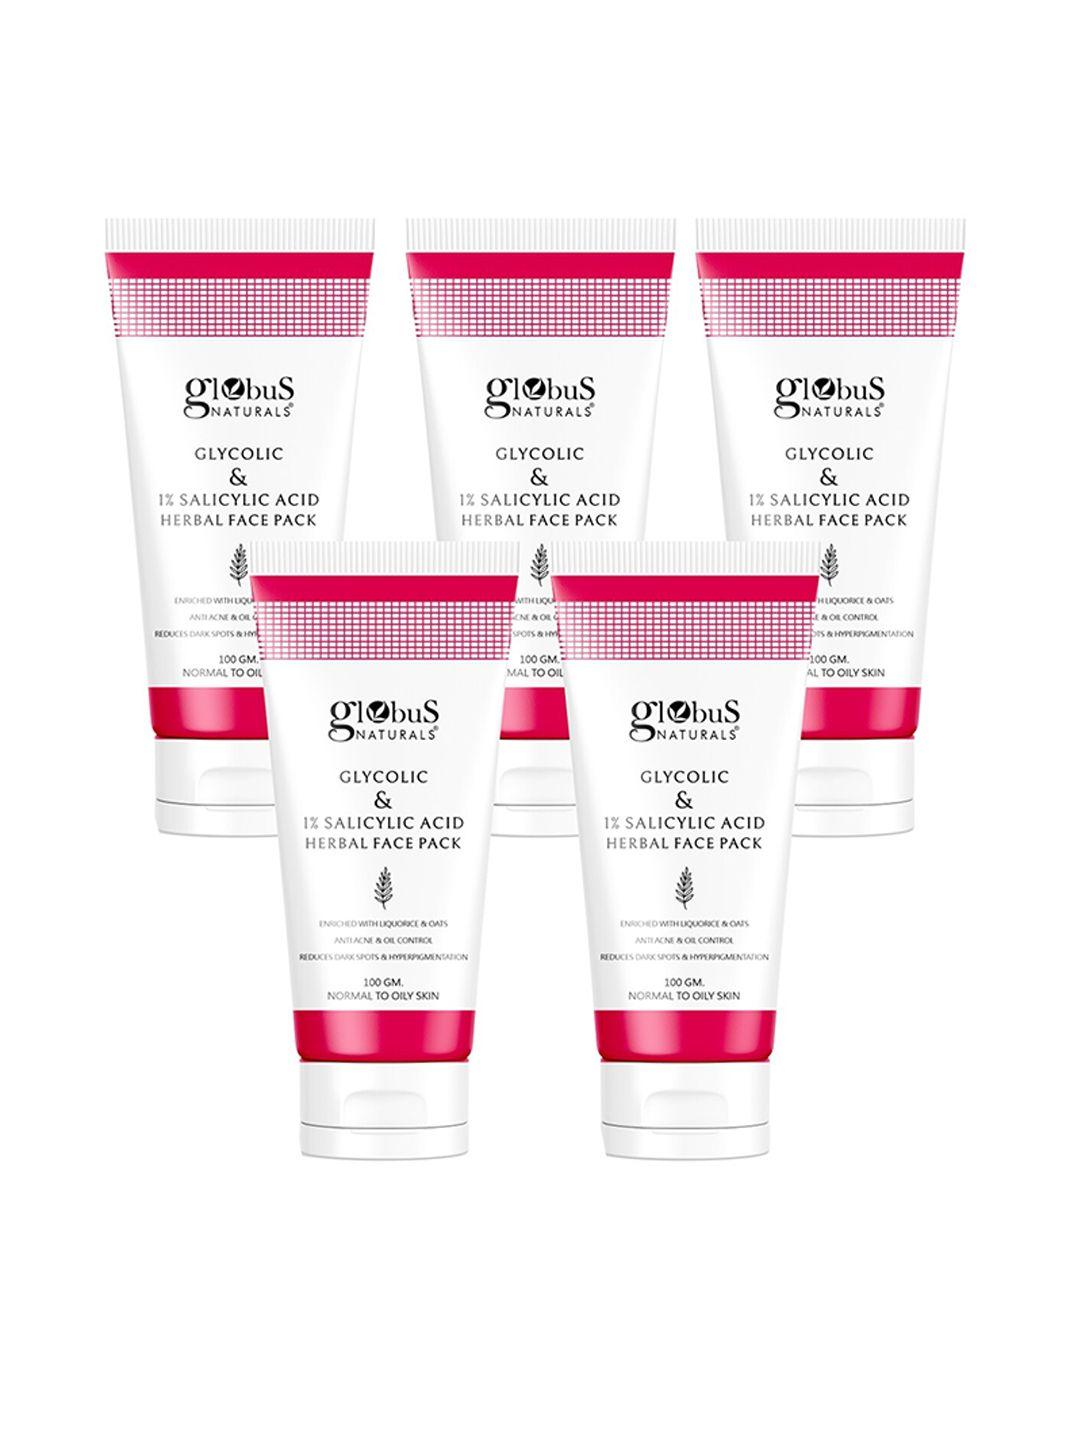 globus naturals set of 5 anti acne glycolic & 1 % salicylic acid face pack - 100 gm each